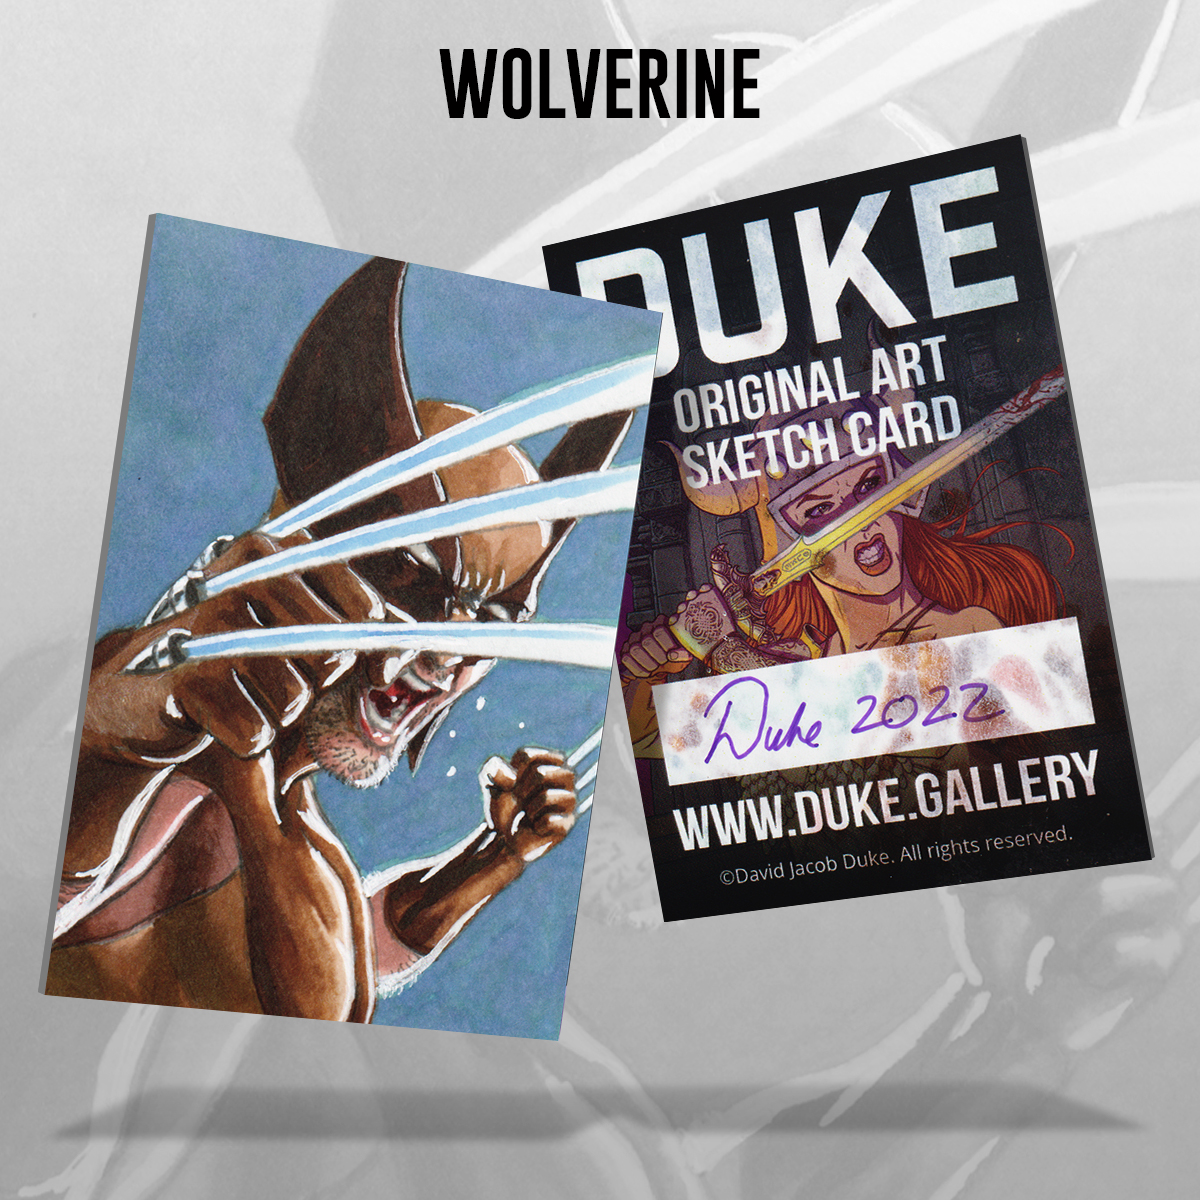 Wolverine Sketch Card by Duke